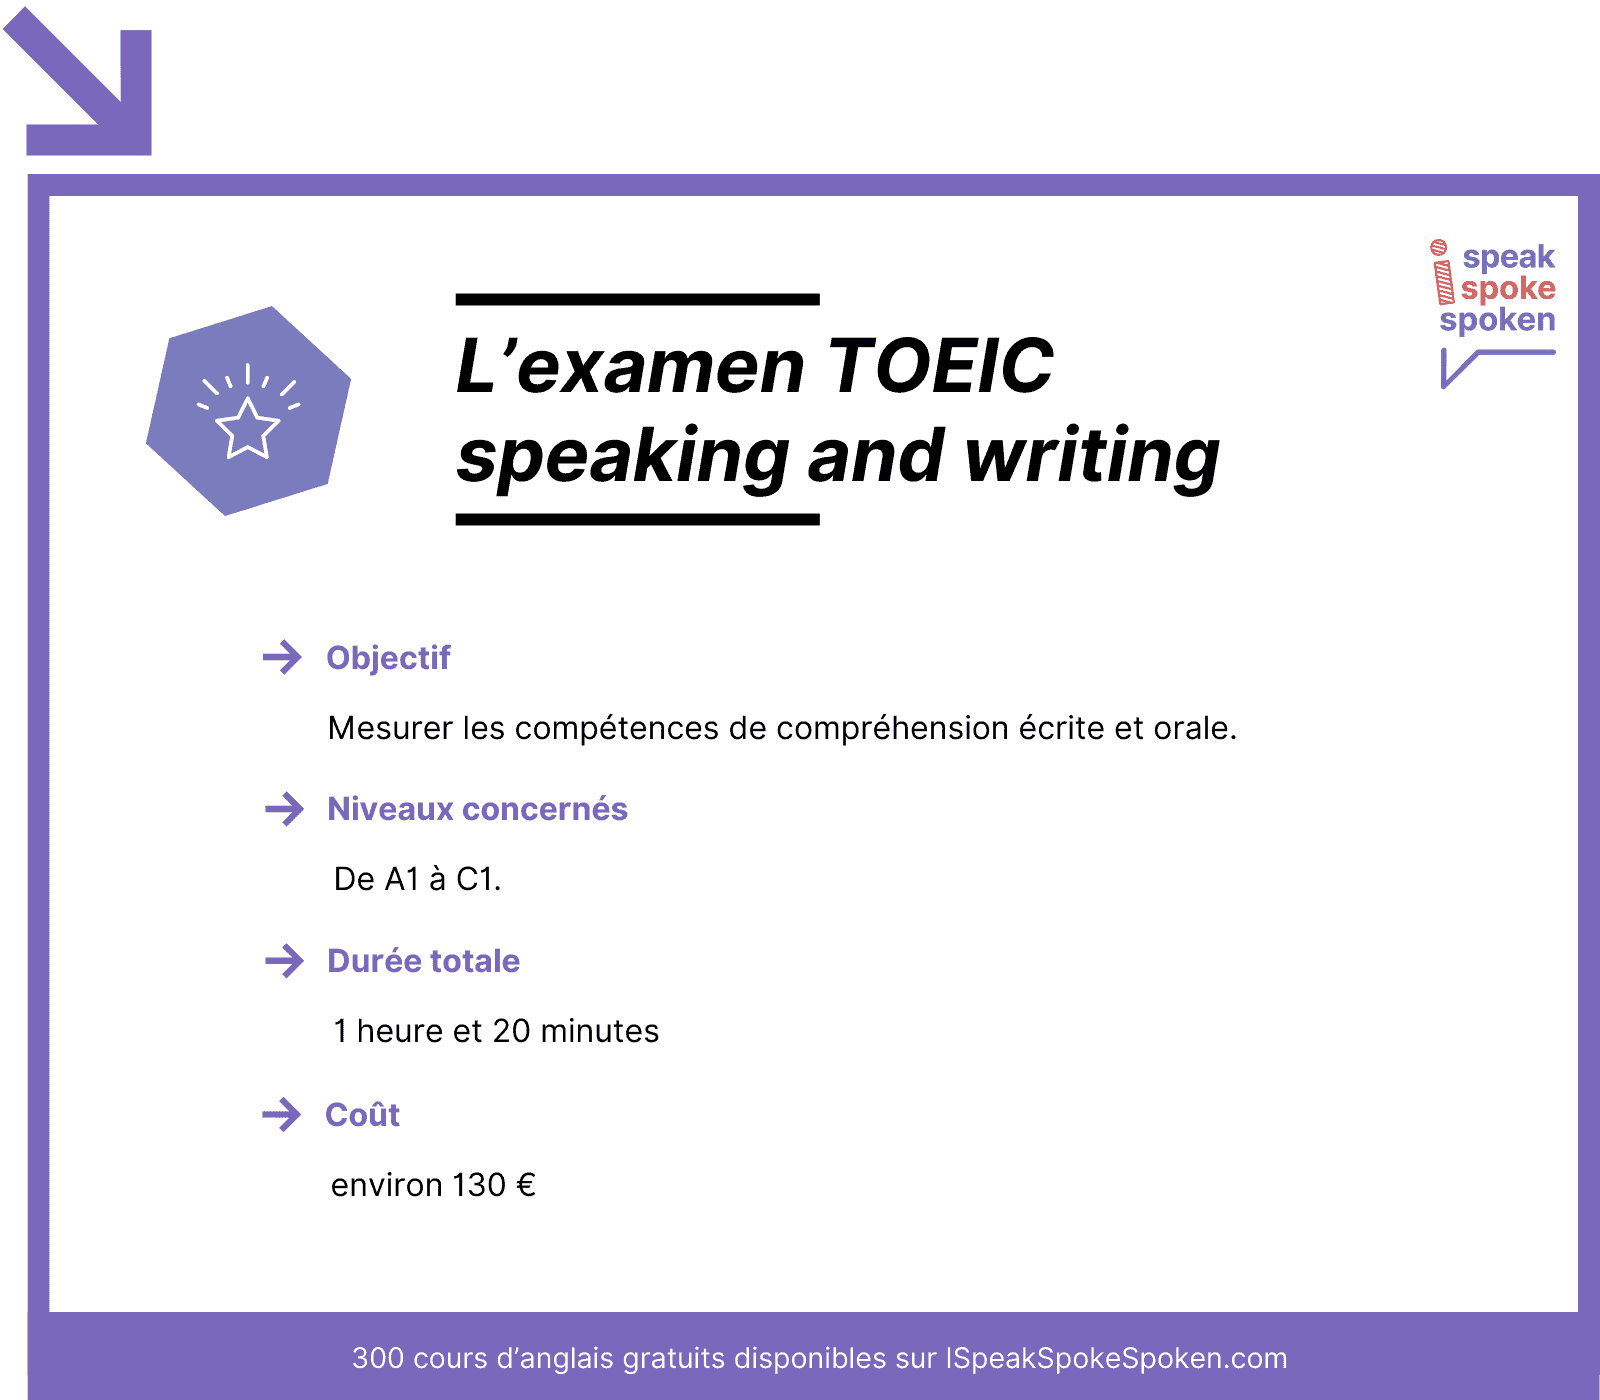 L'examen toeic speaking and writing